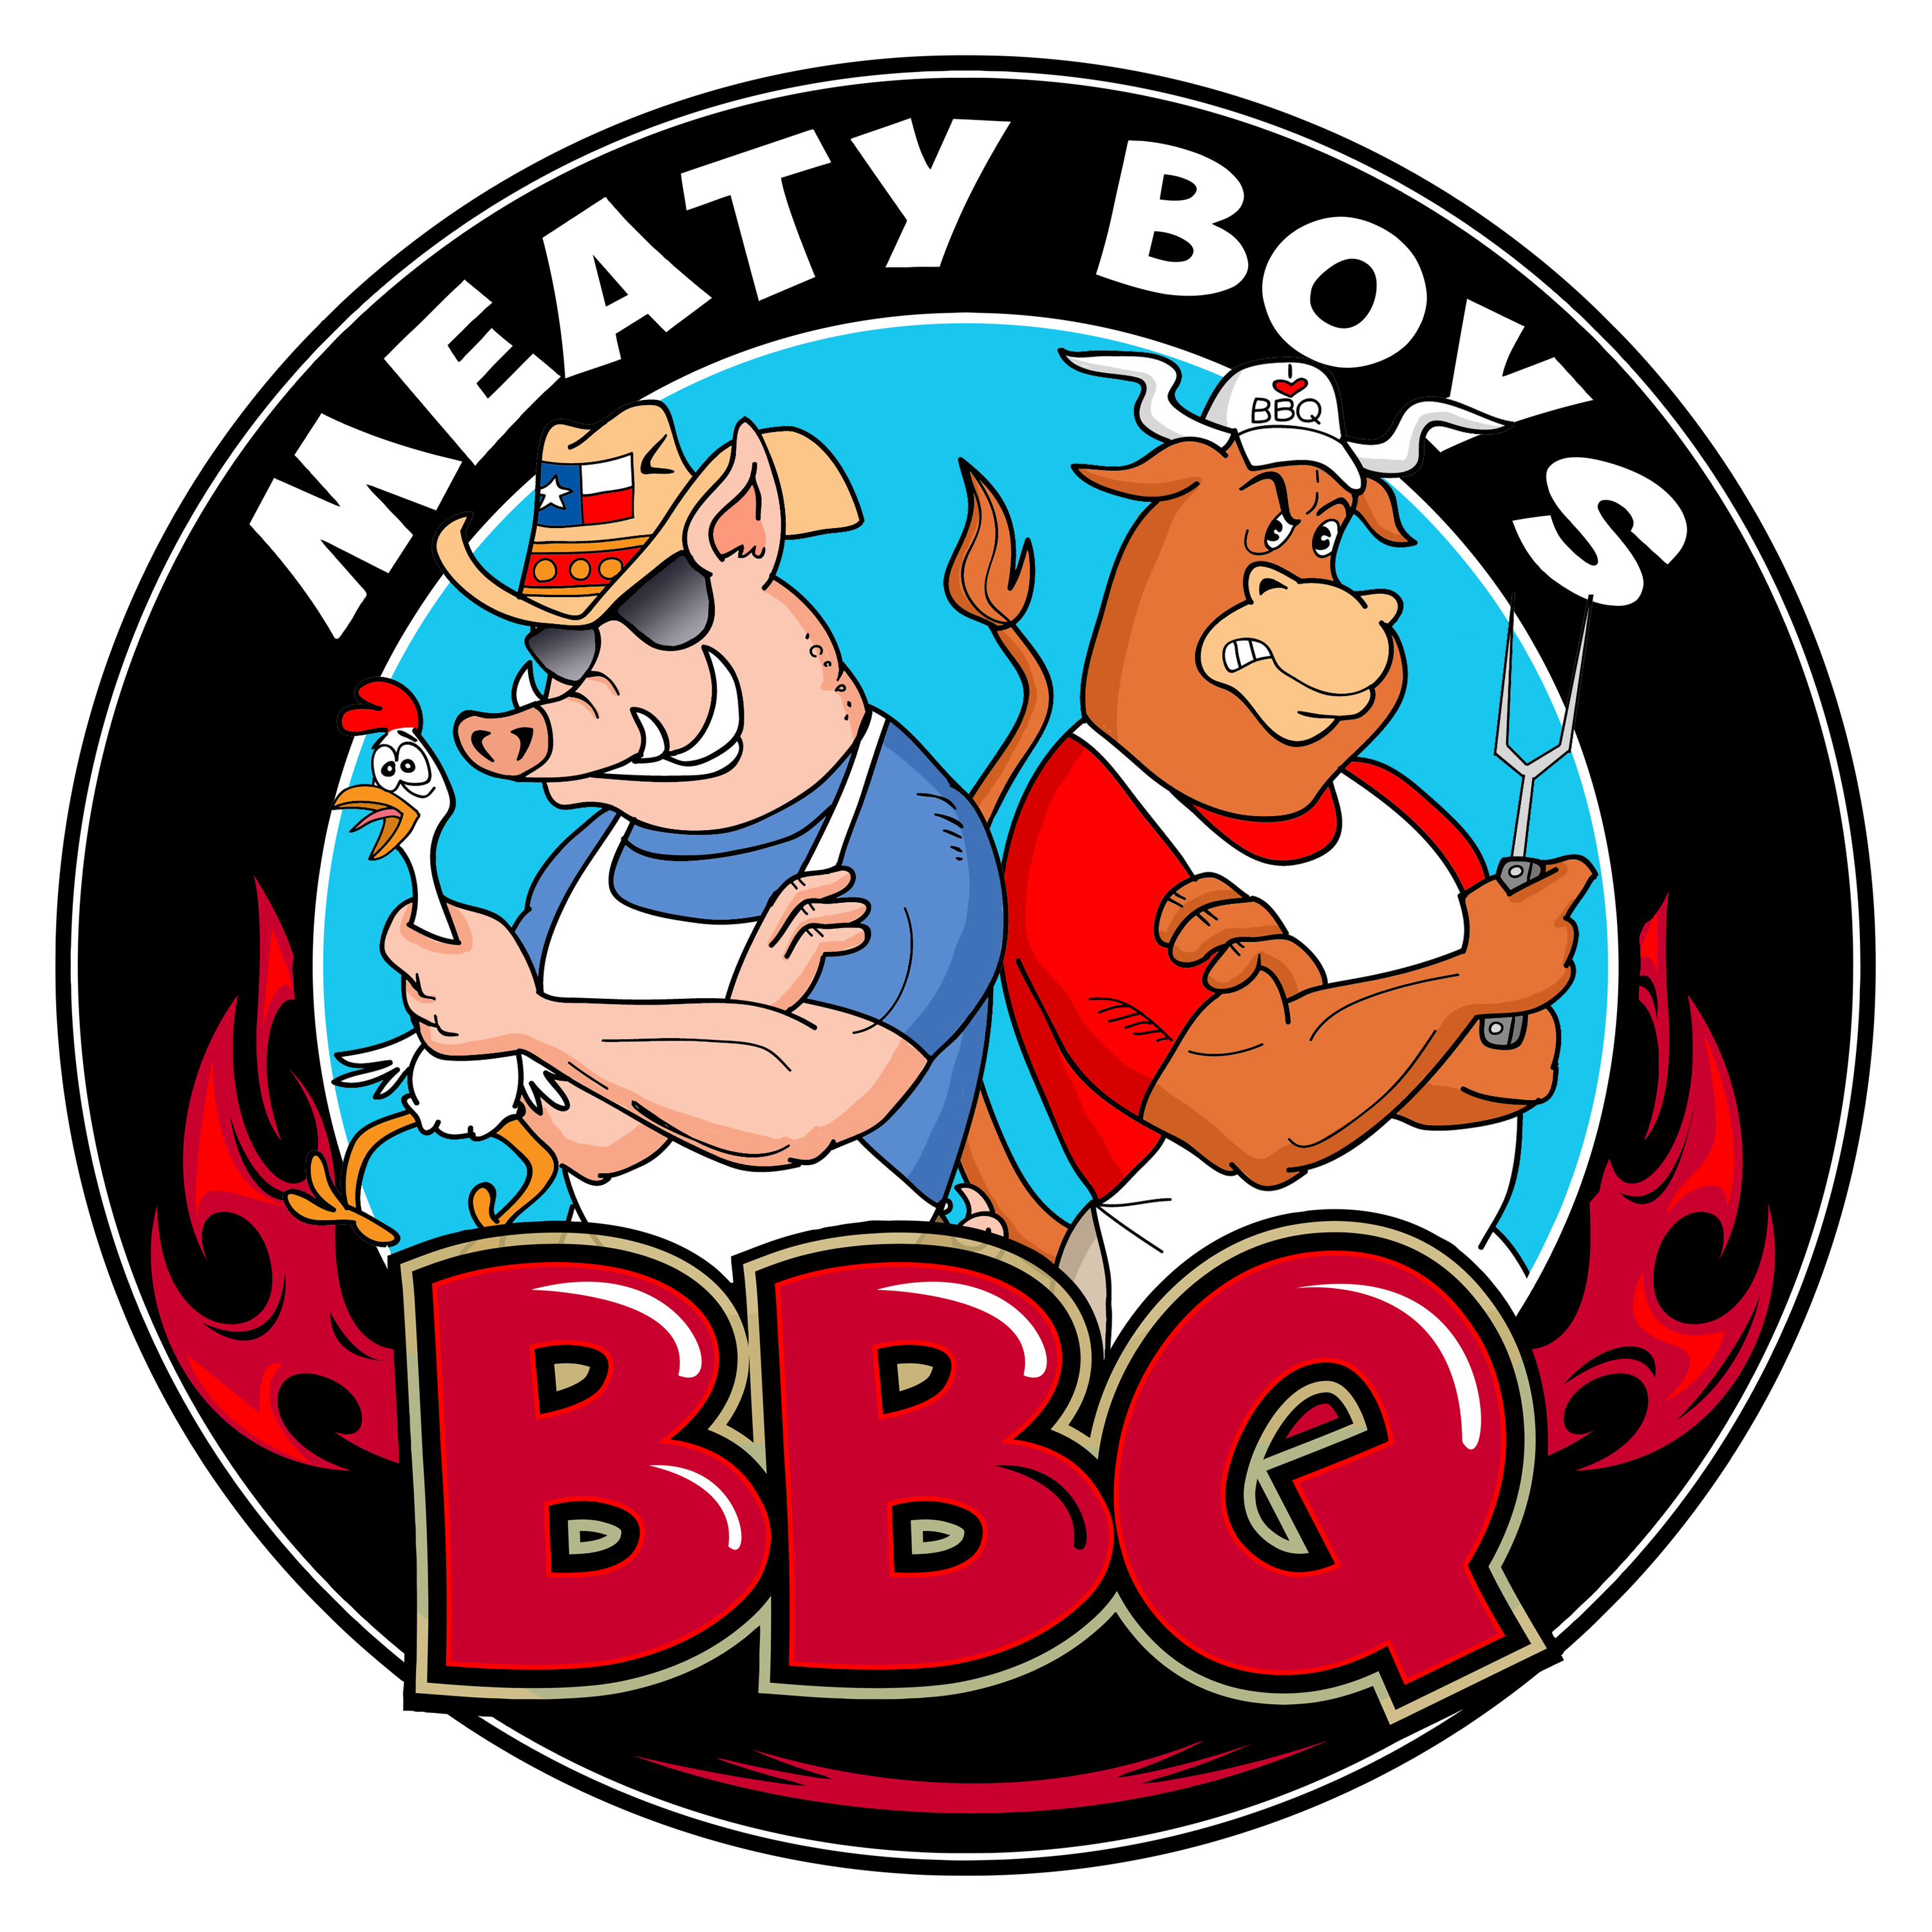 PNG Meaty Boys BBQ (1)